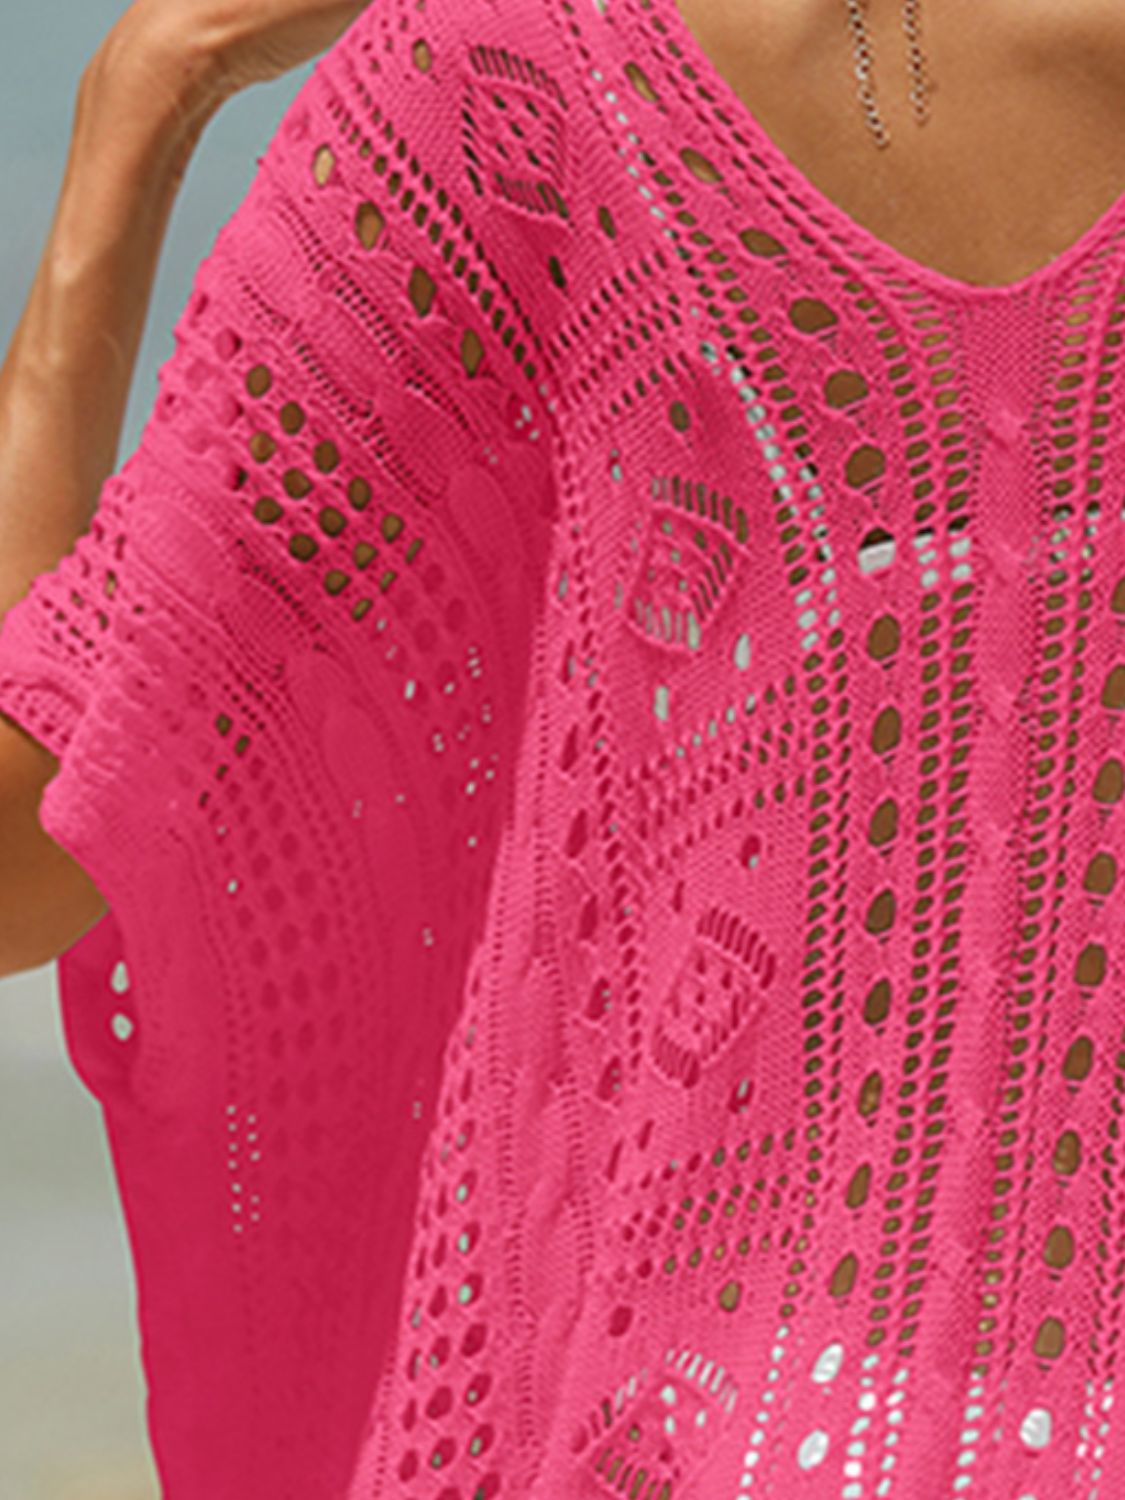 TEEK - Knit Mesh Half Sleeve Cover-Up DRESS TEEK Trend Hot Pink One Size 